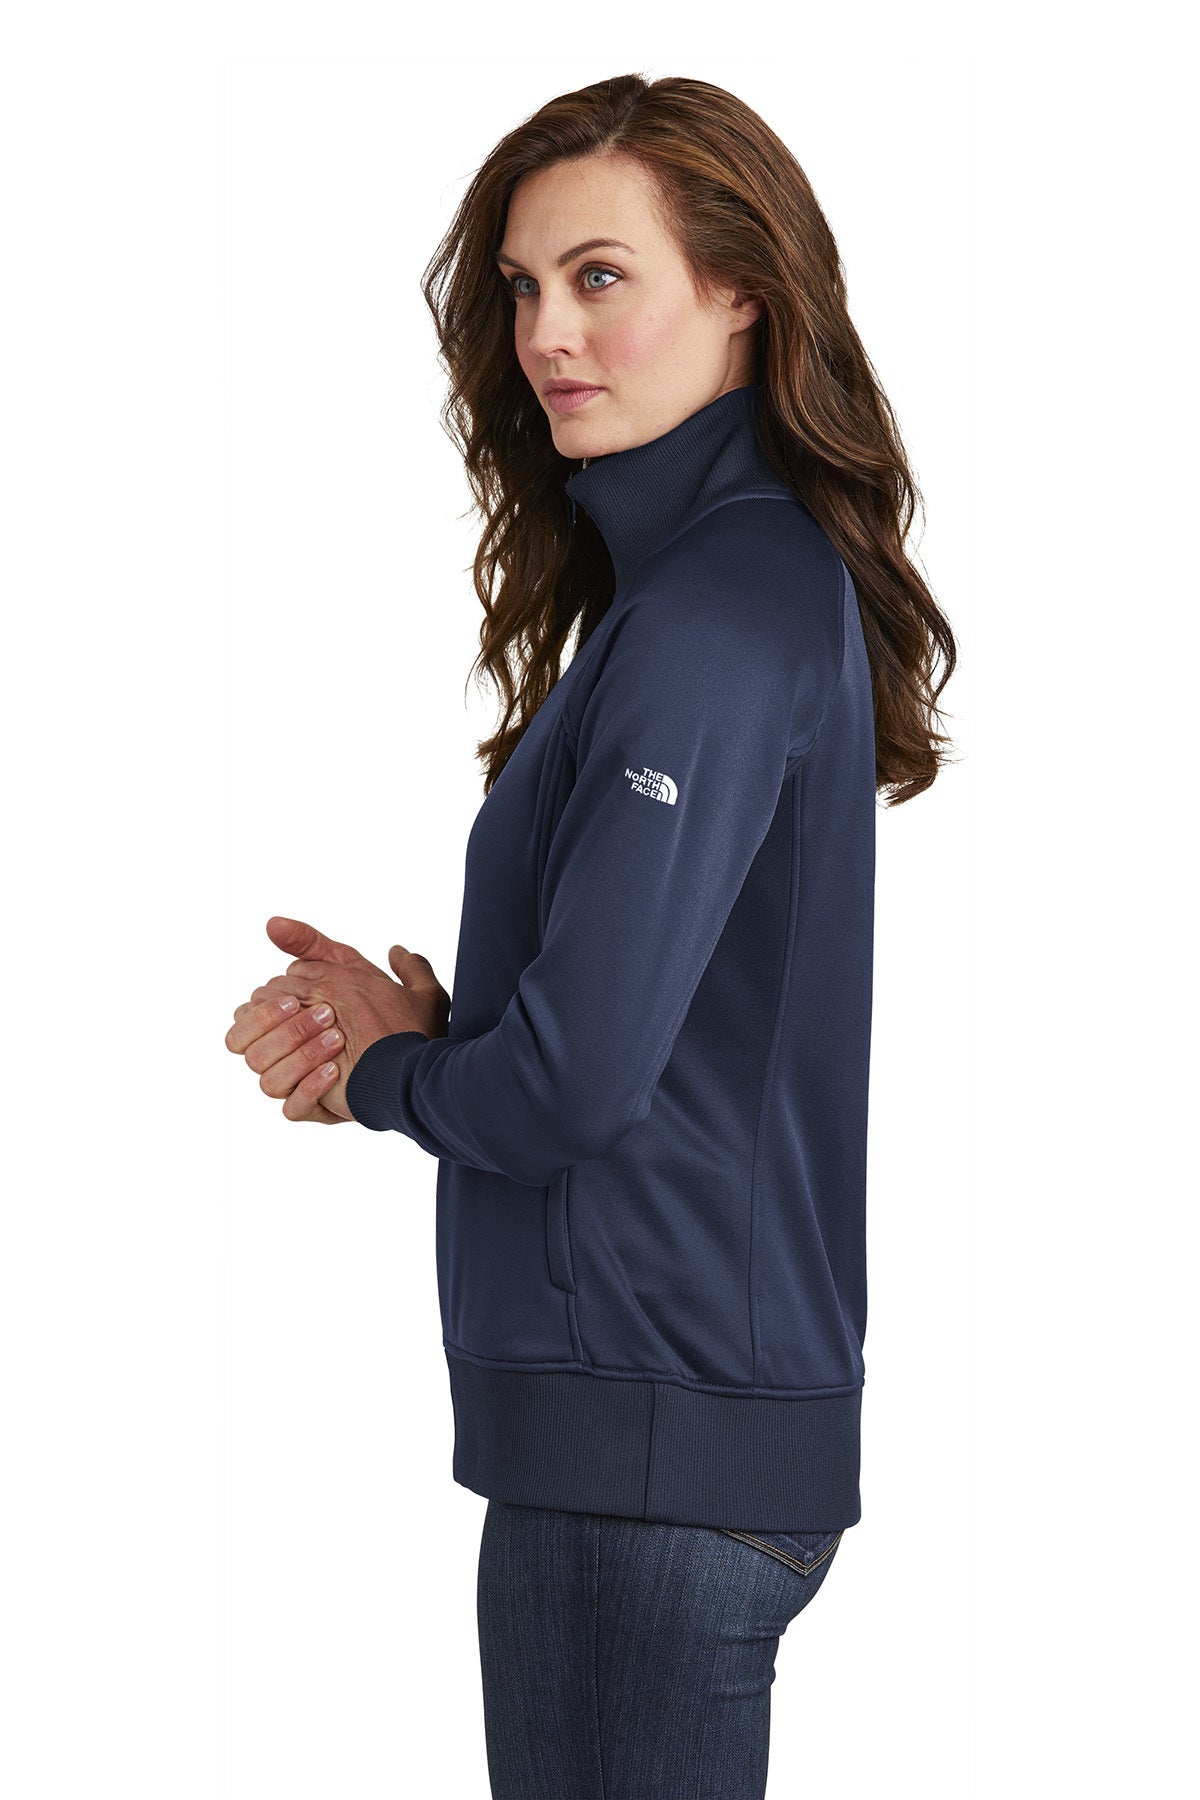 The North Face Ladies Tech FullZip Fleece Jacket Urban Navy